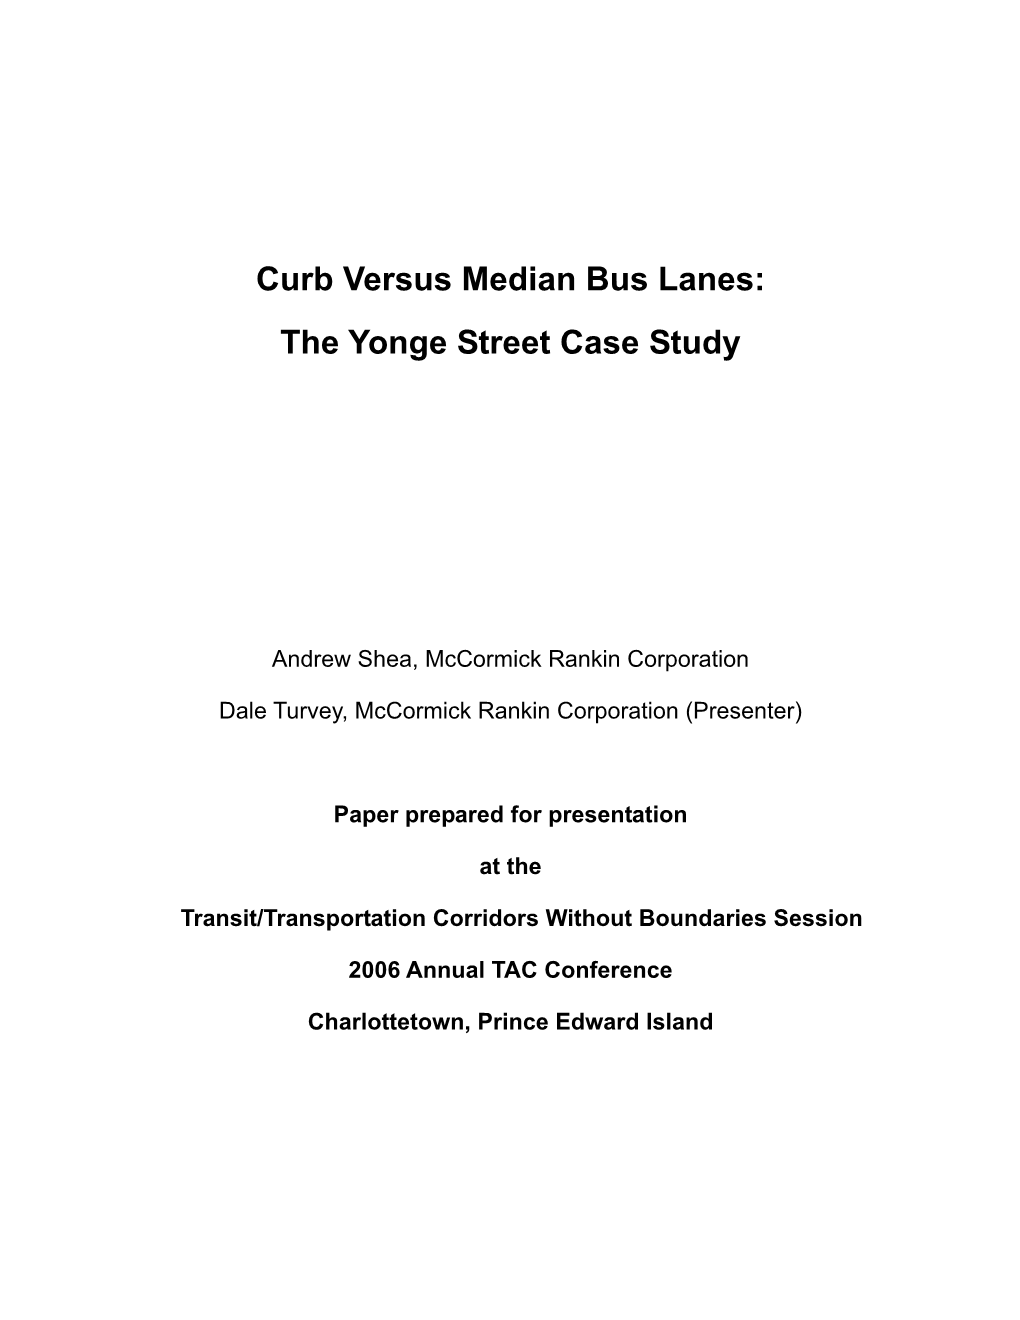 Curb Versus Median Bus Lanes: the Yonge Street Case Study